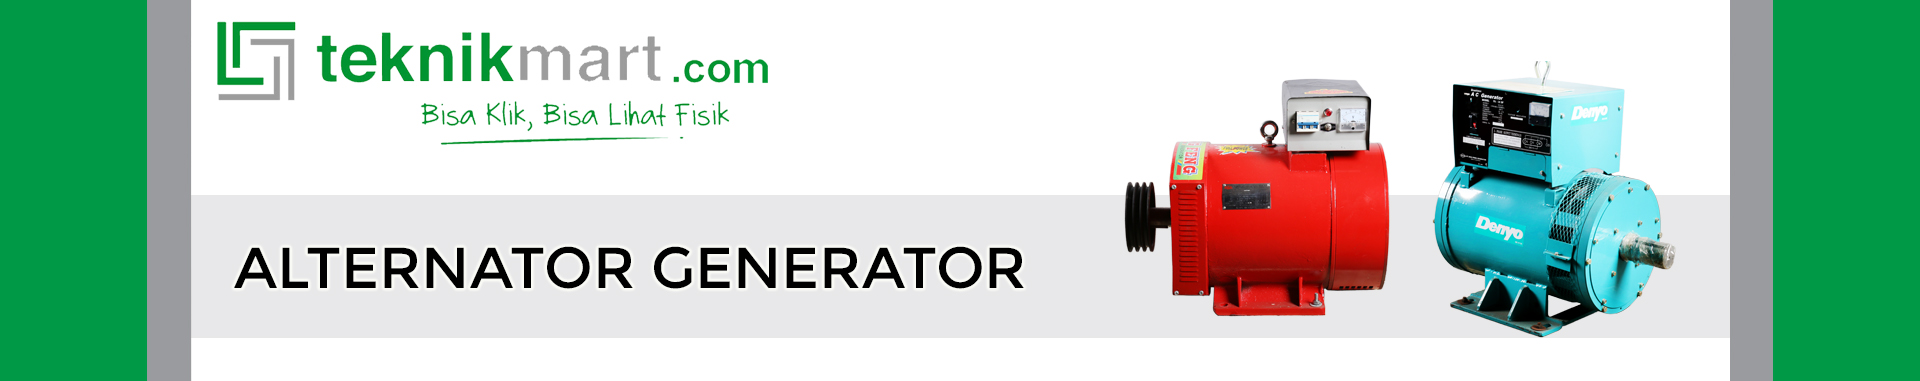 Alternator Generator